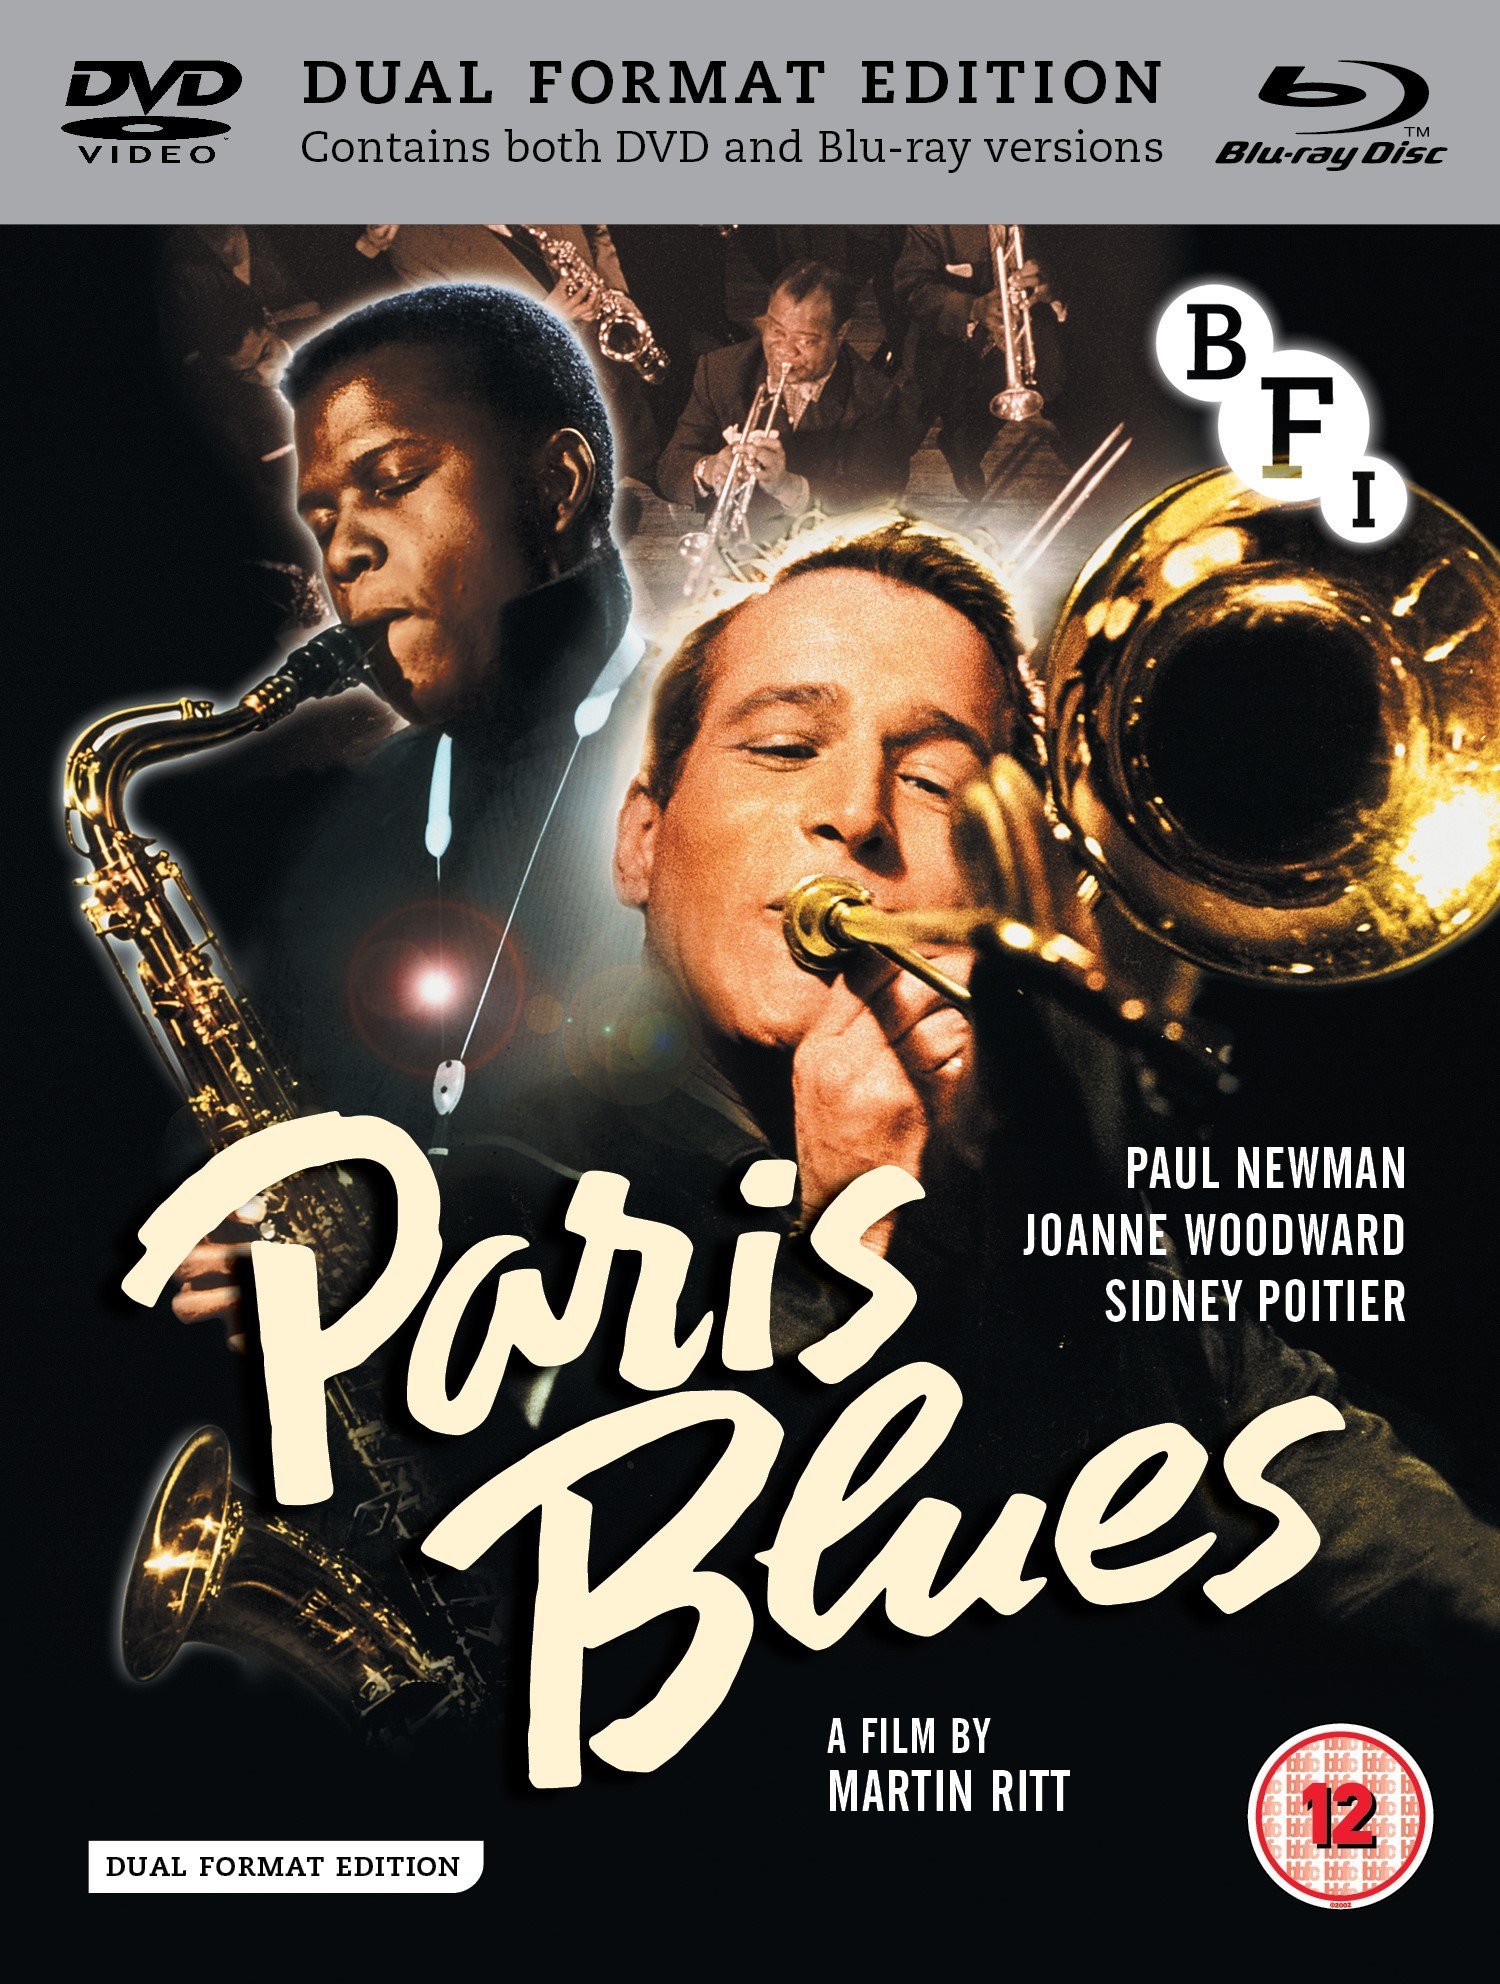 Paris Blues (DVD + Blu-ray)